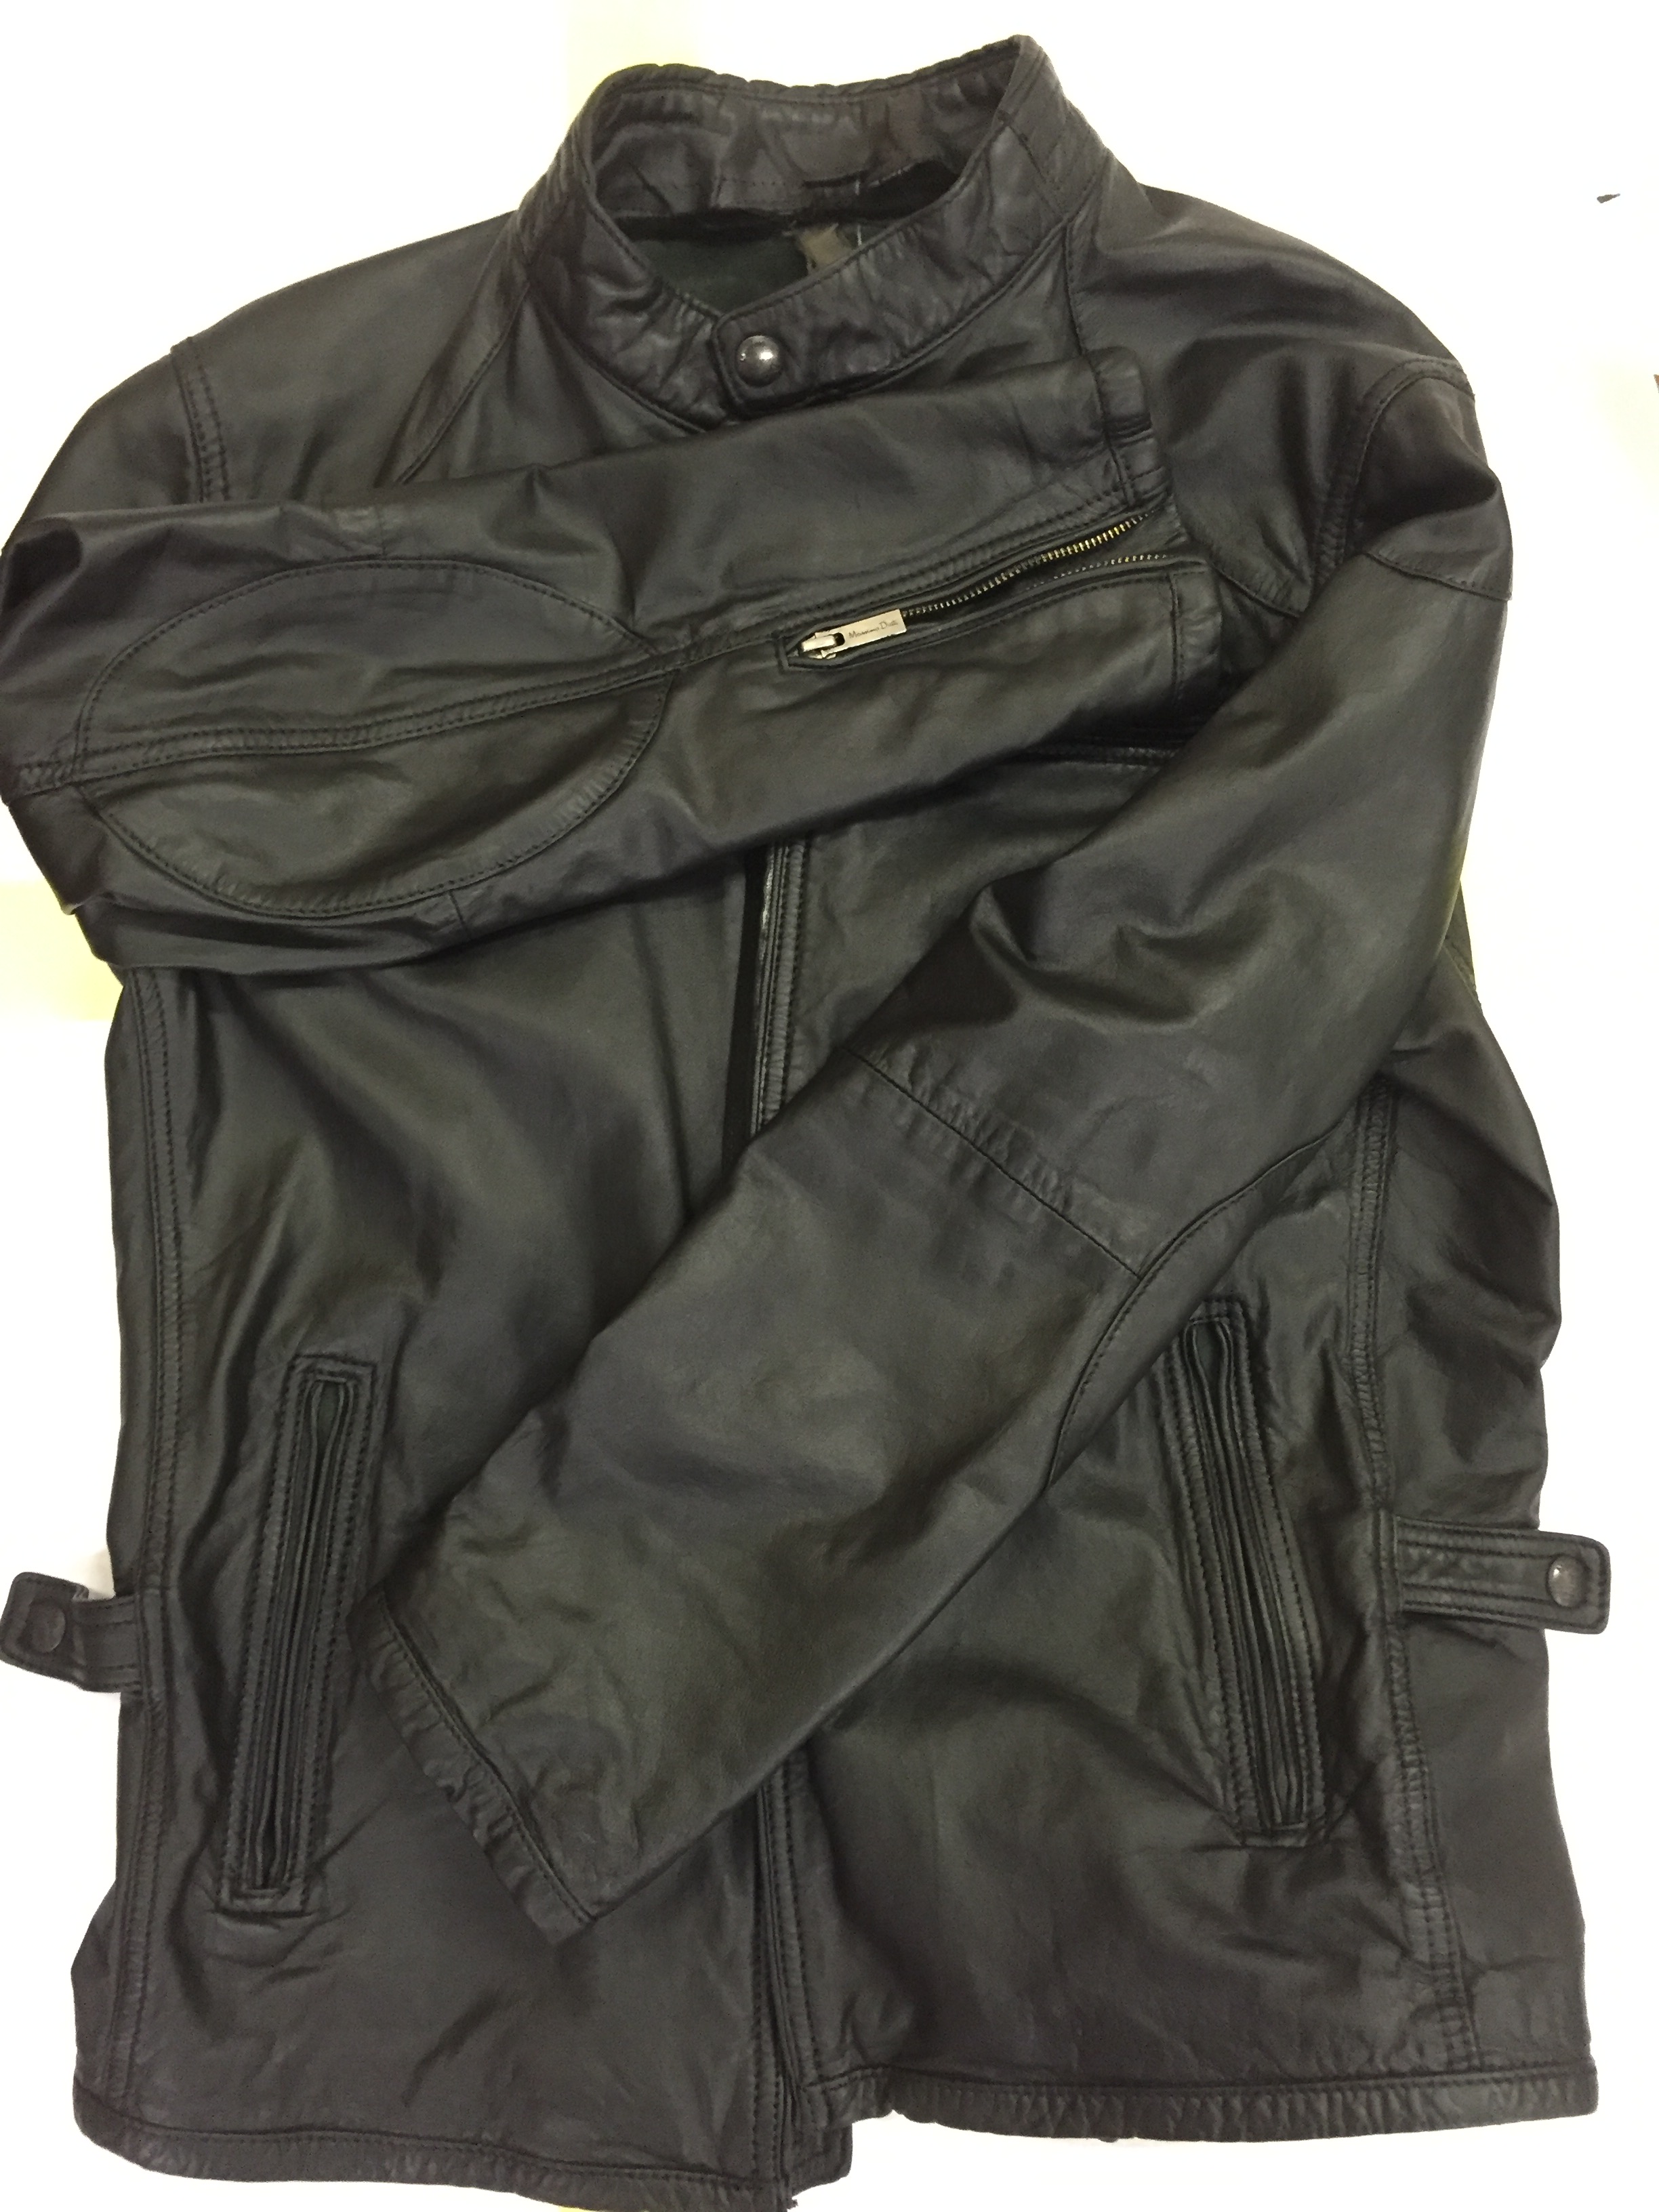 Leather Jacket Cleaning - Leather Jacket Restoration